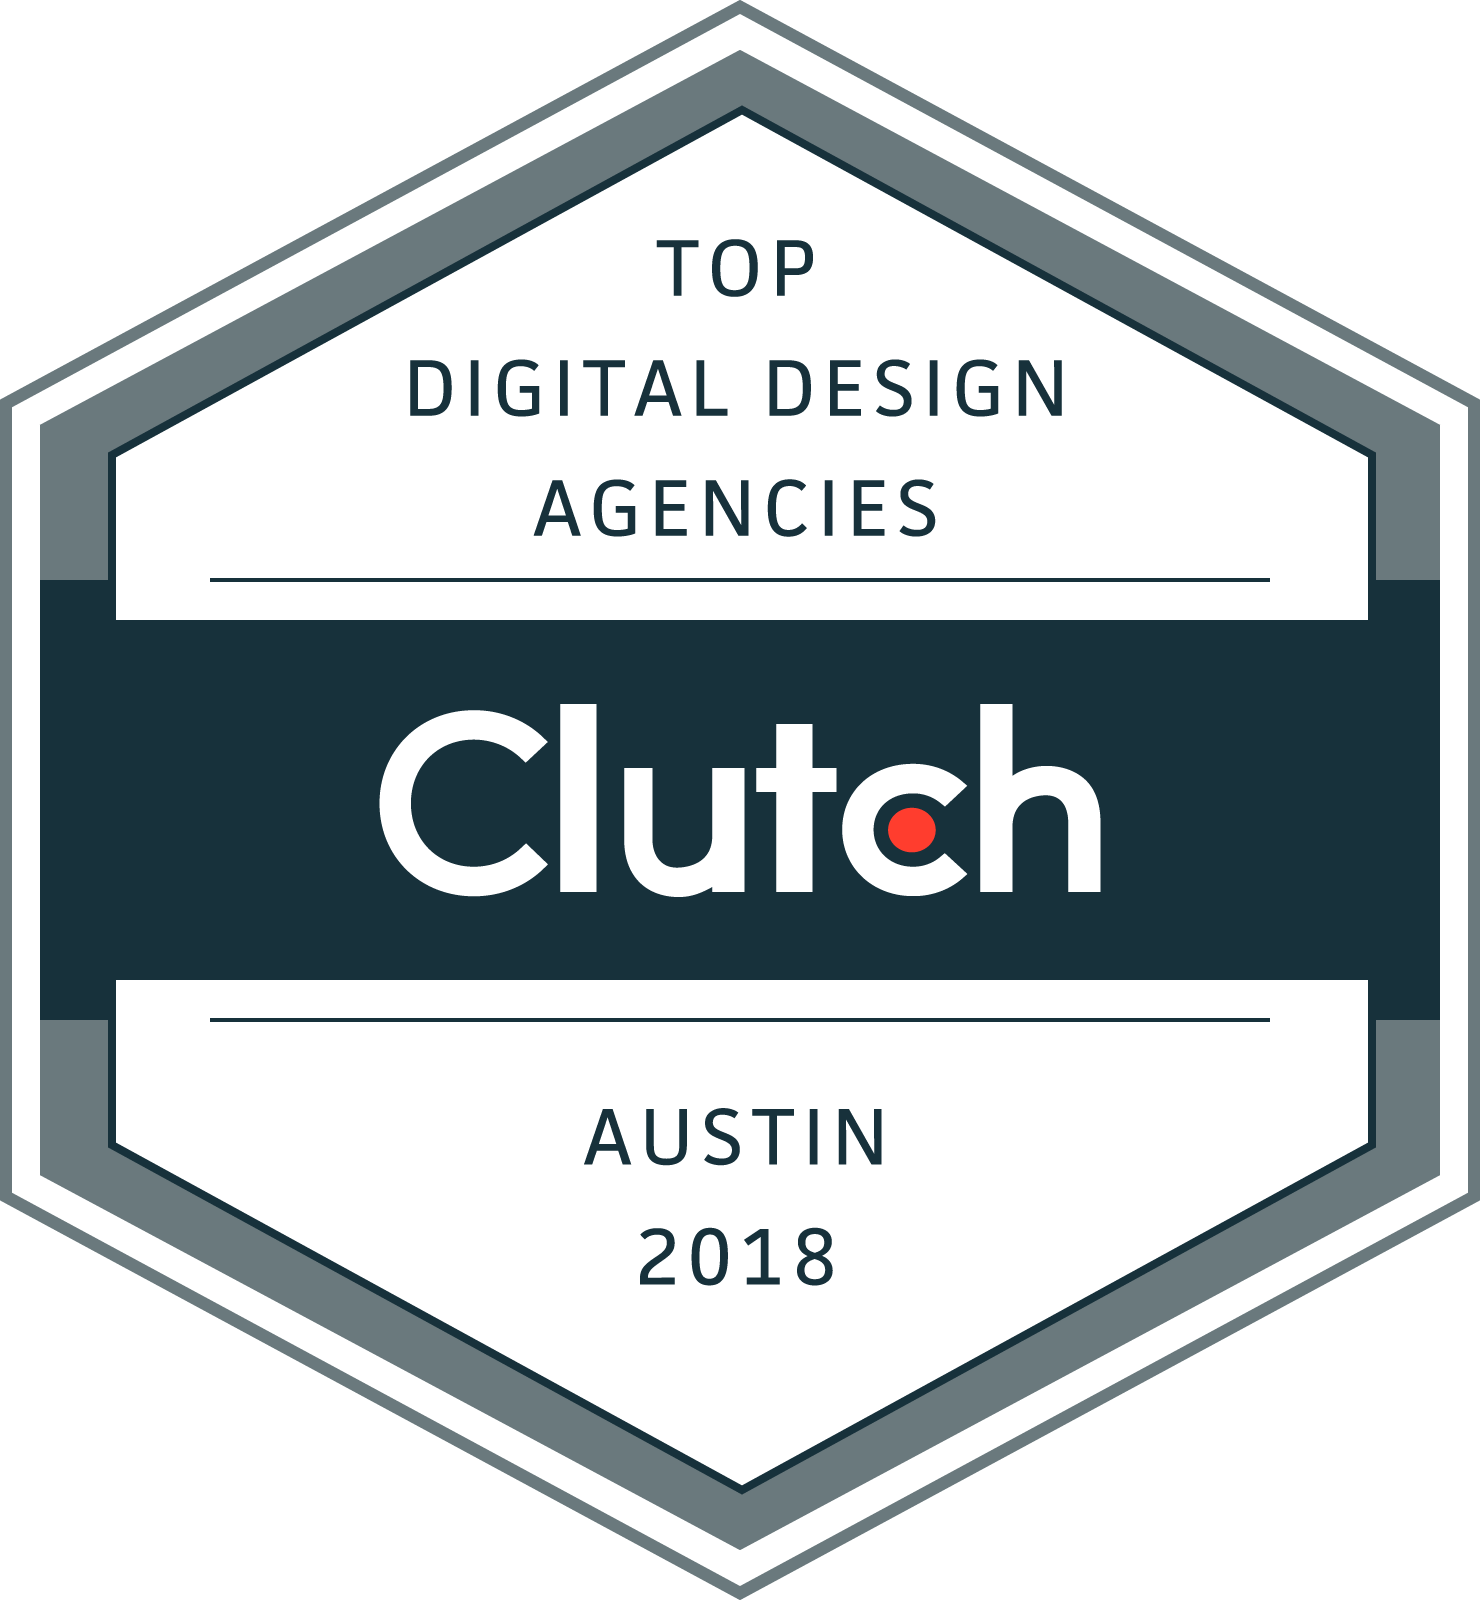 Top Digital Design Agency Austin, TX 2018 Badge